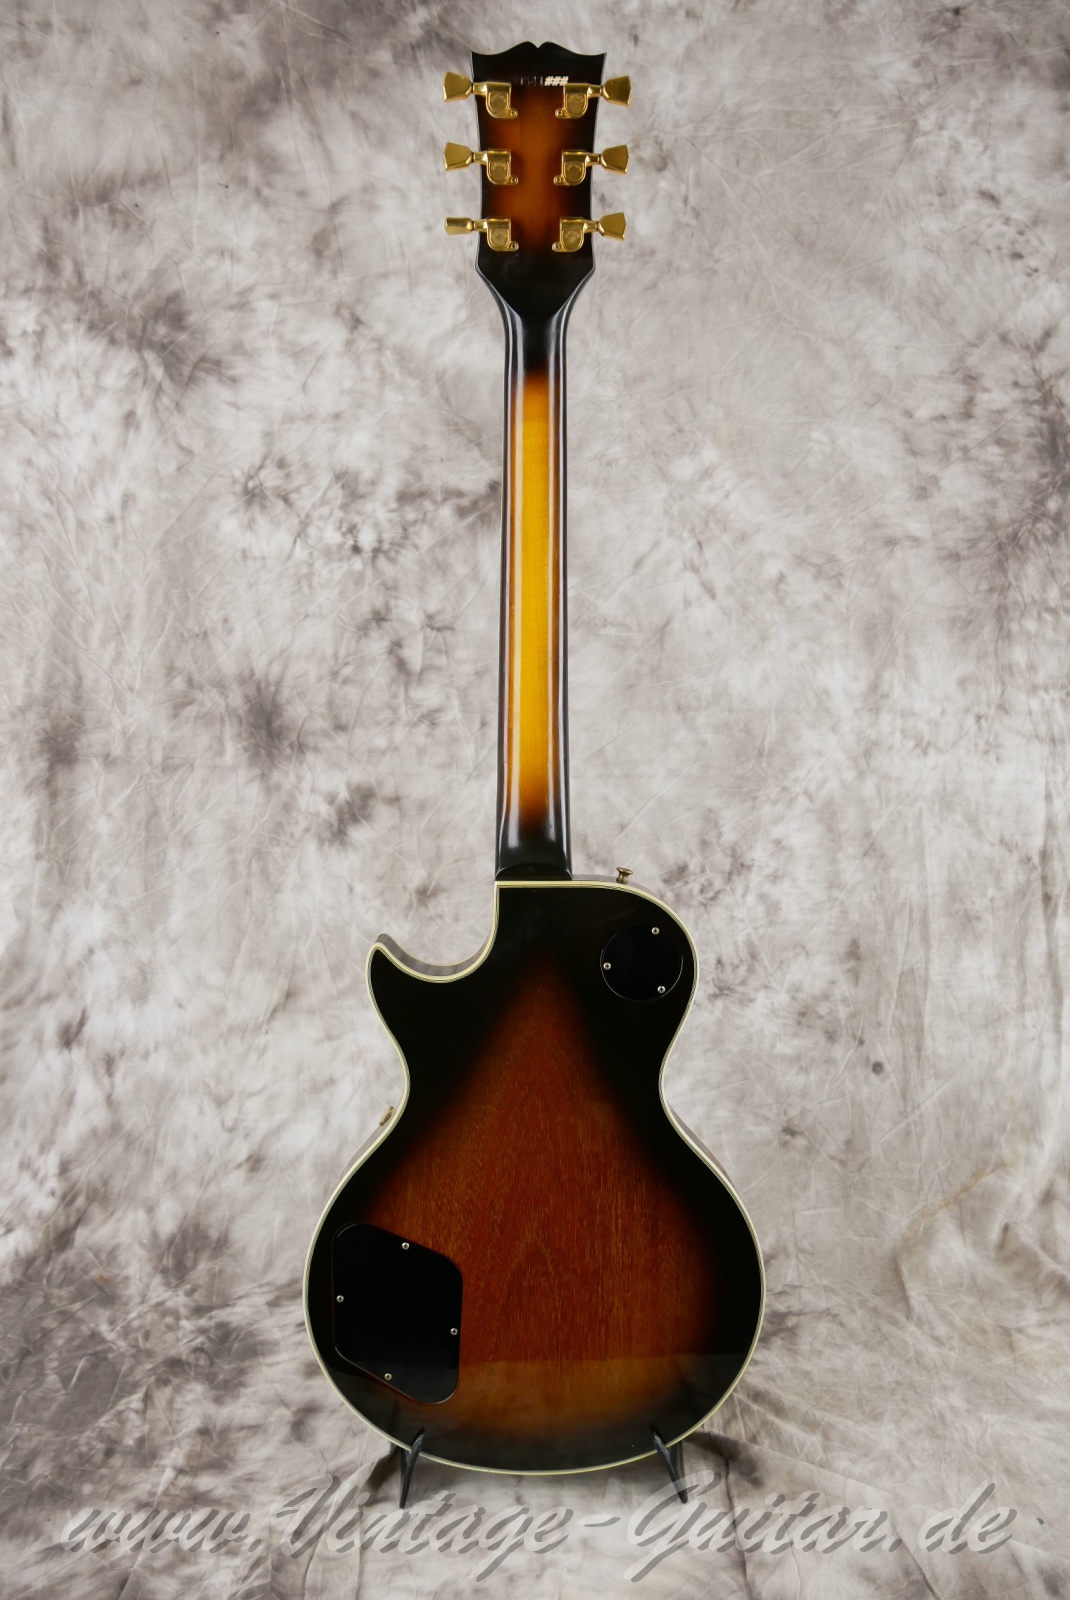 Gibson-Les-Paul-Cutom-1981-tobacco-sunburst-002.jpg